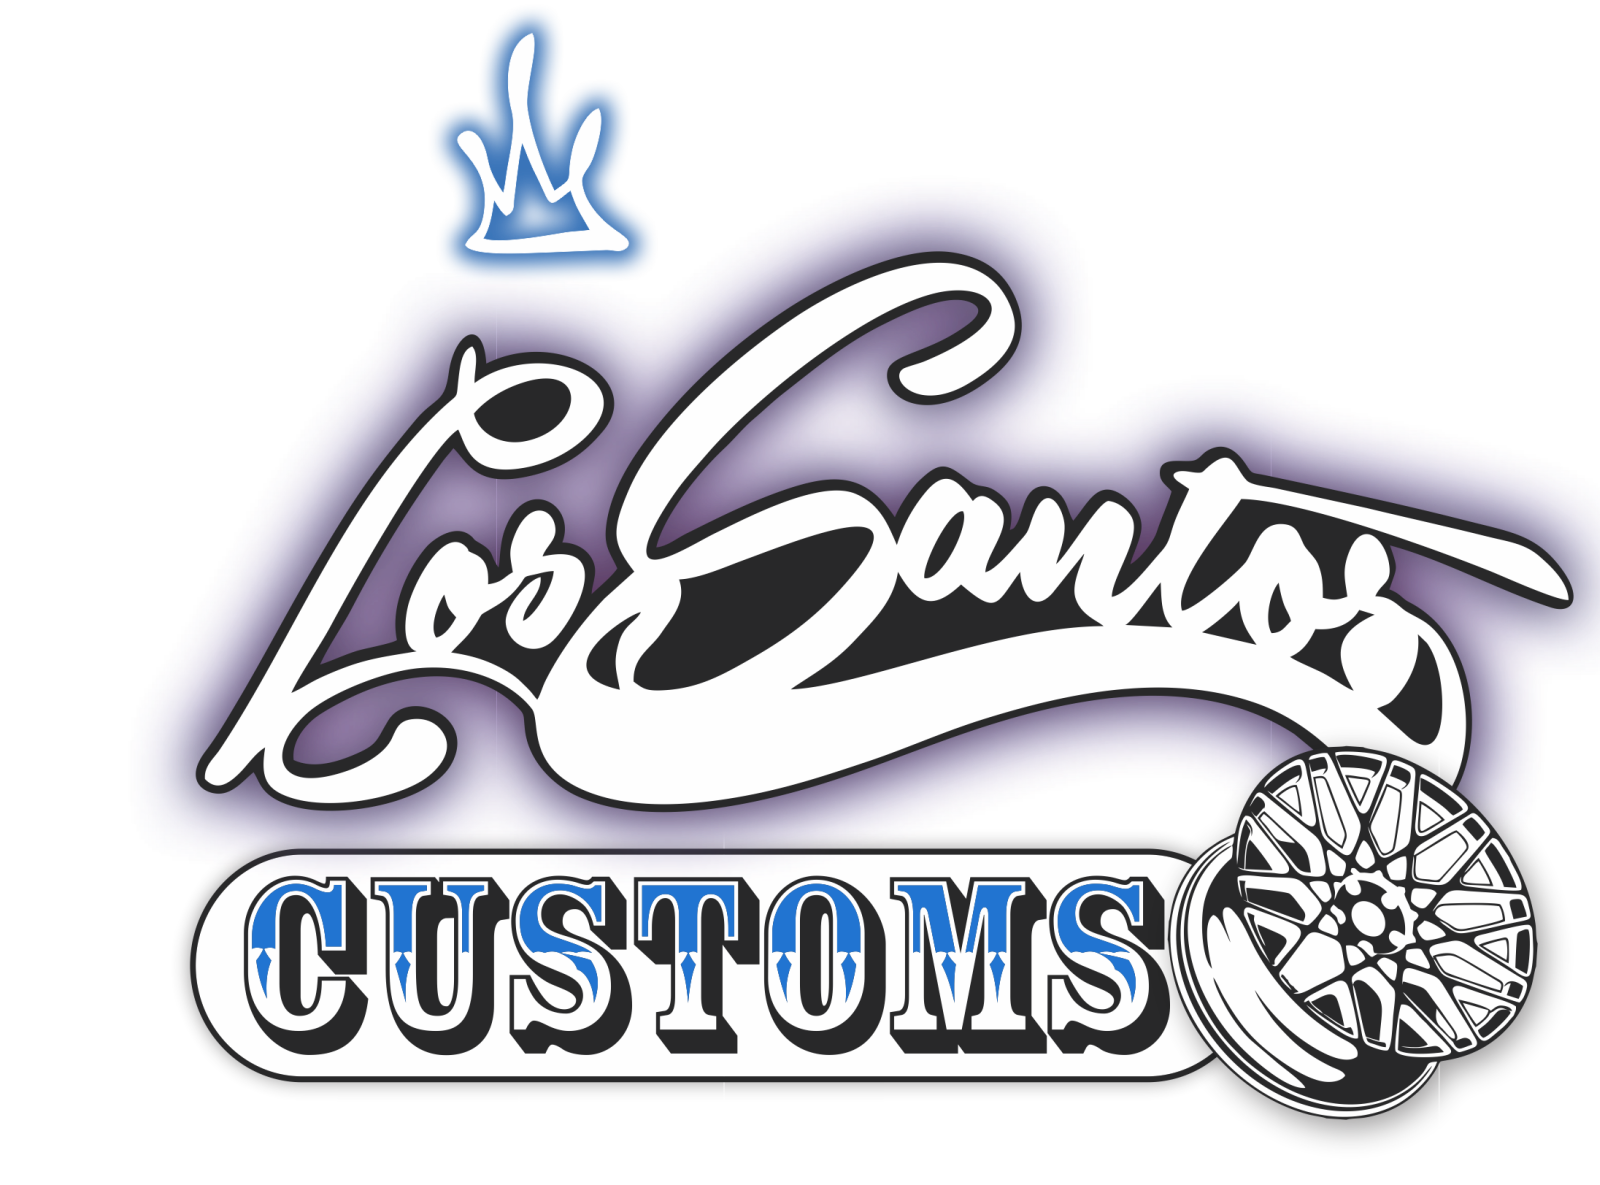 LosSantos Customs Logo by Devon Houlson on Dribbble